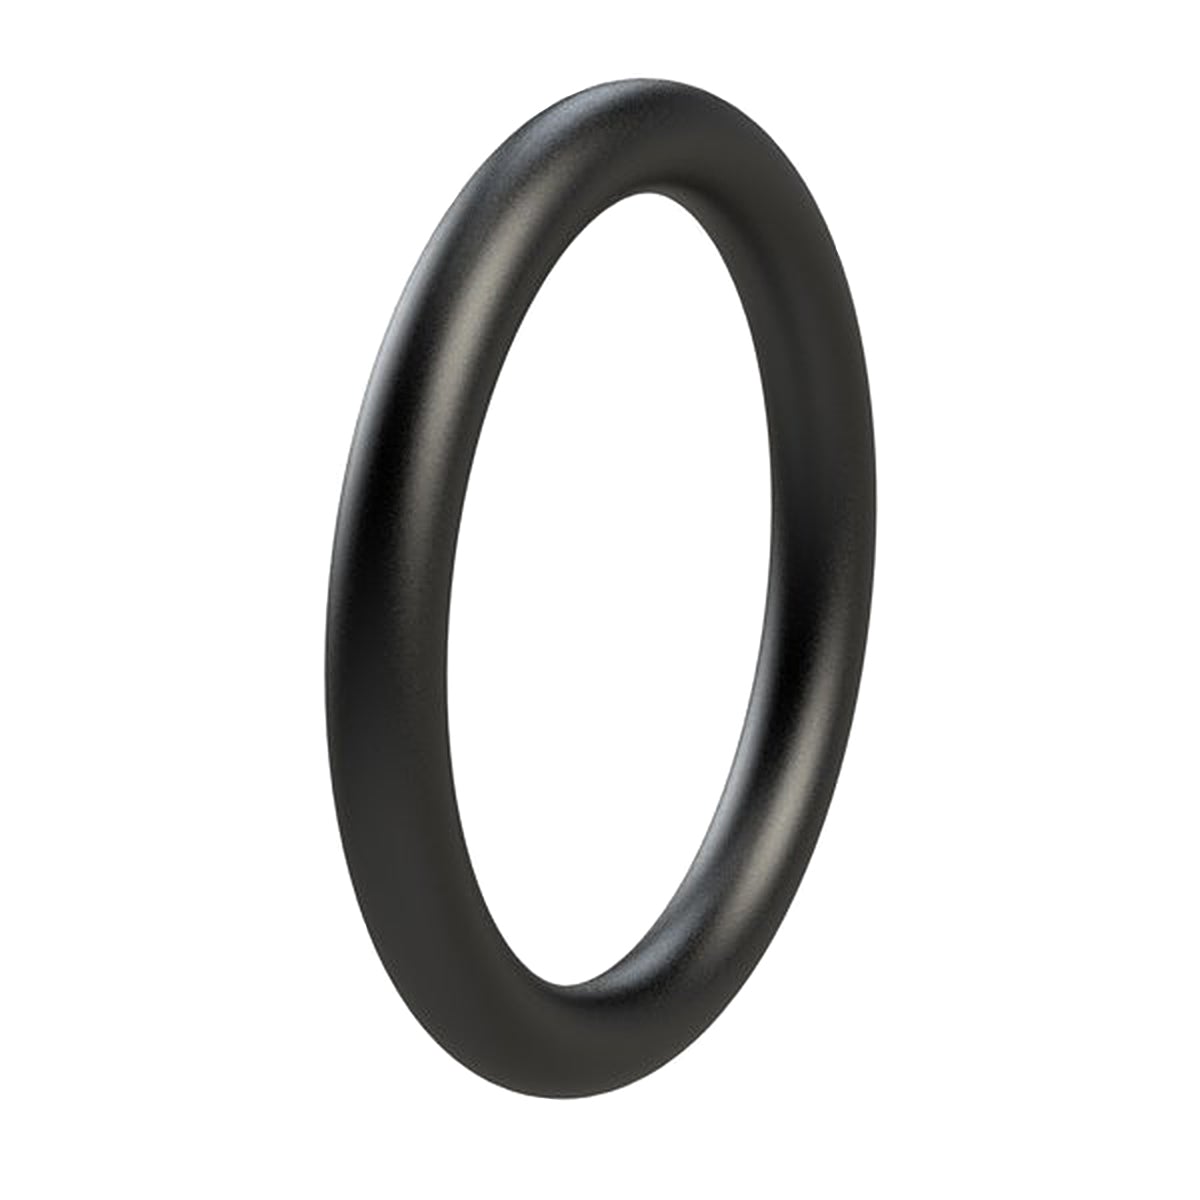 O-ring 100.0x4.0 NBR 70° Svart - Remlagret.se